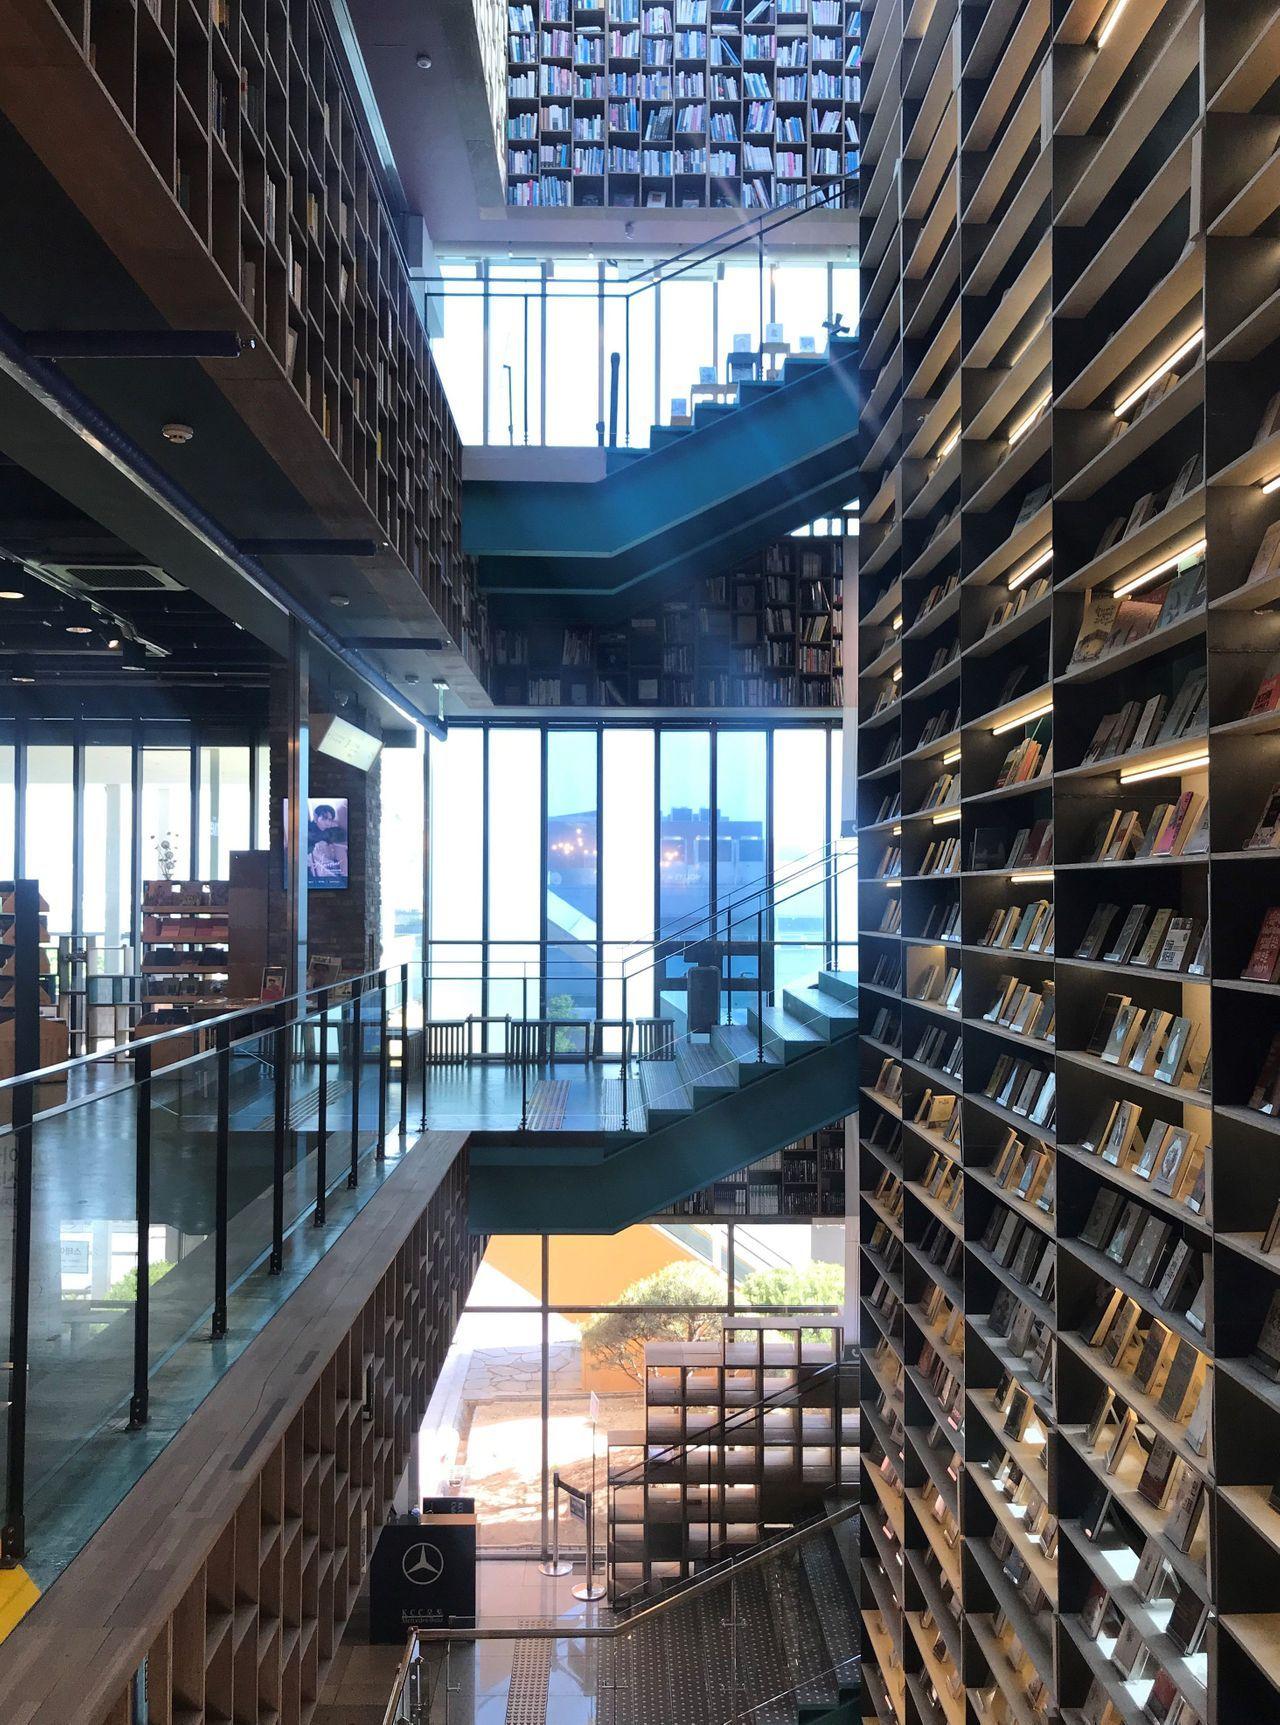 Itaewon Seoul library, book park blue square, bookshelves inside